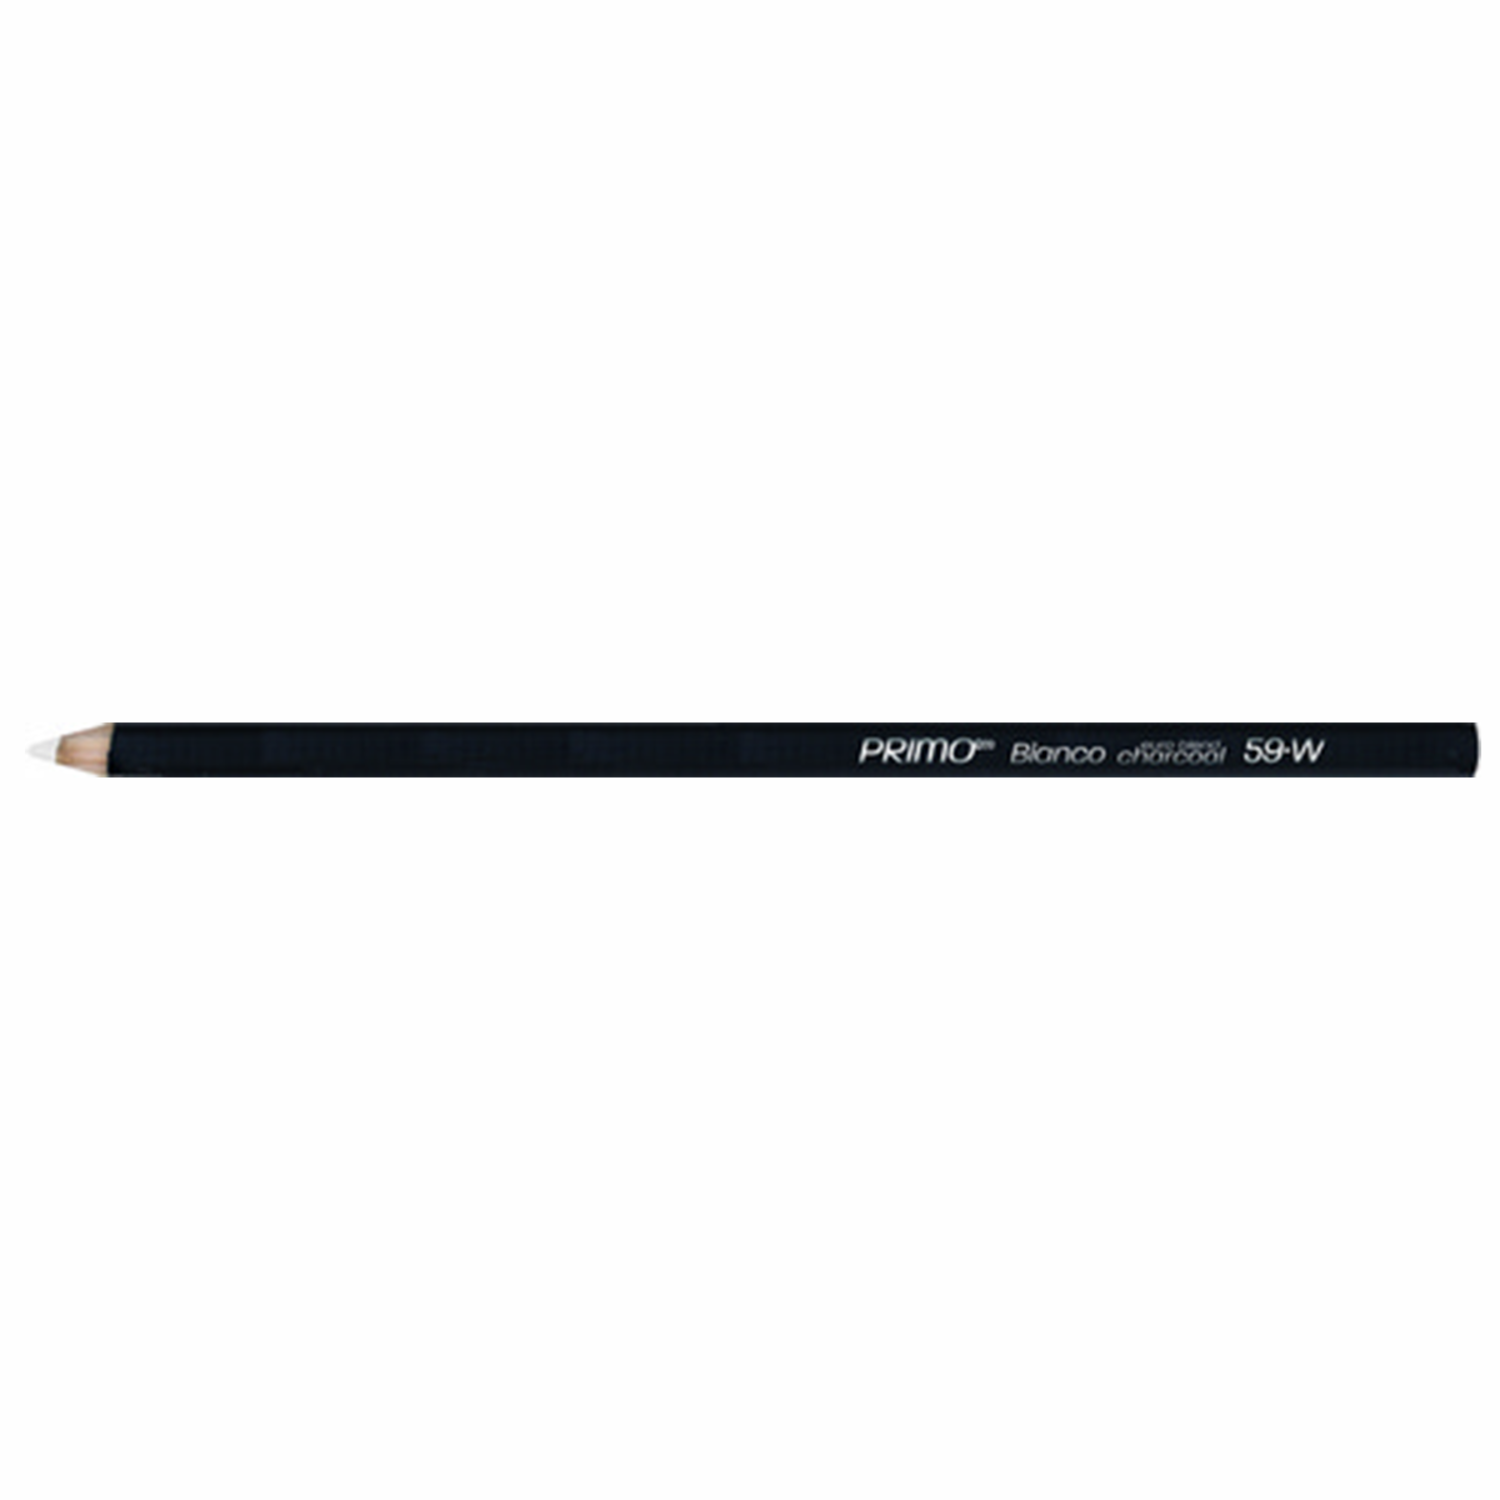 General Pencil Company : Charcoal Pencil : White